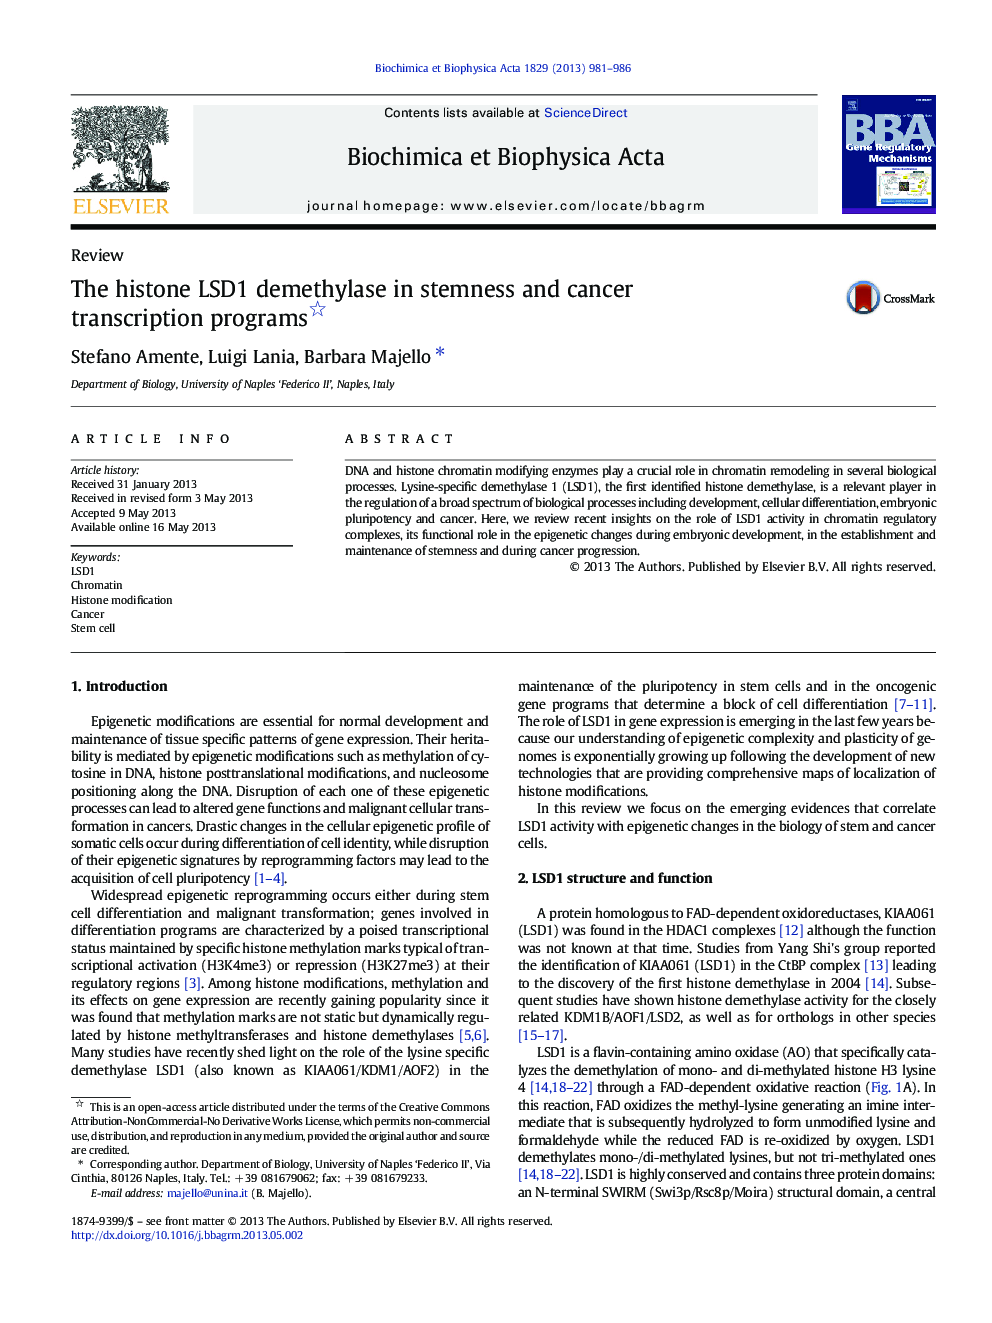 The histone LSD1 demethylase in stemness and cancer transcription programs